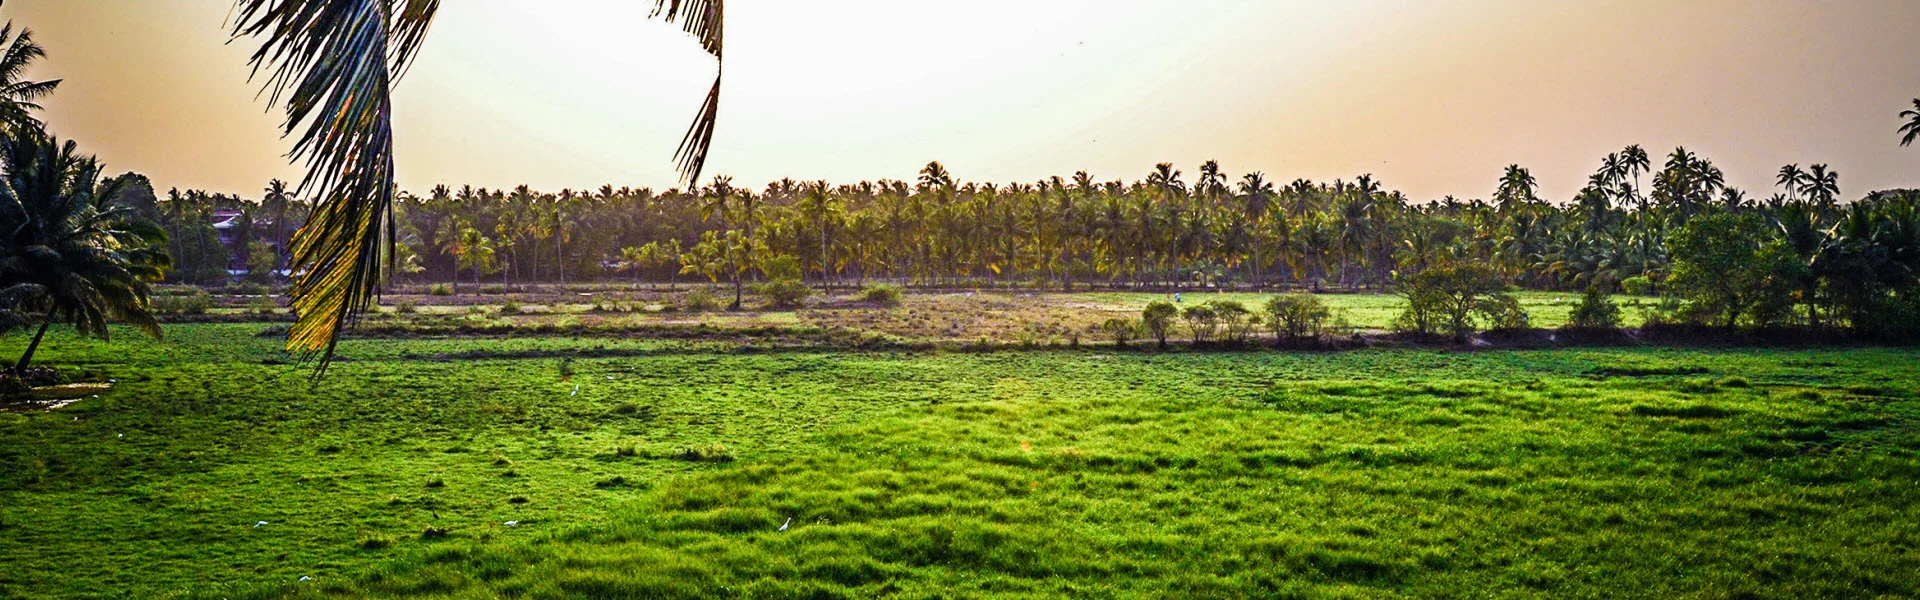 Rice plantation in Goa